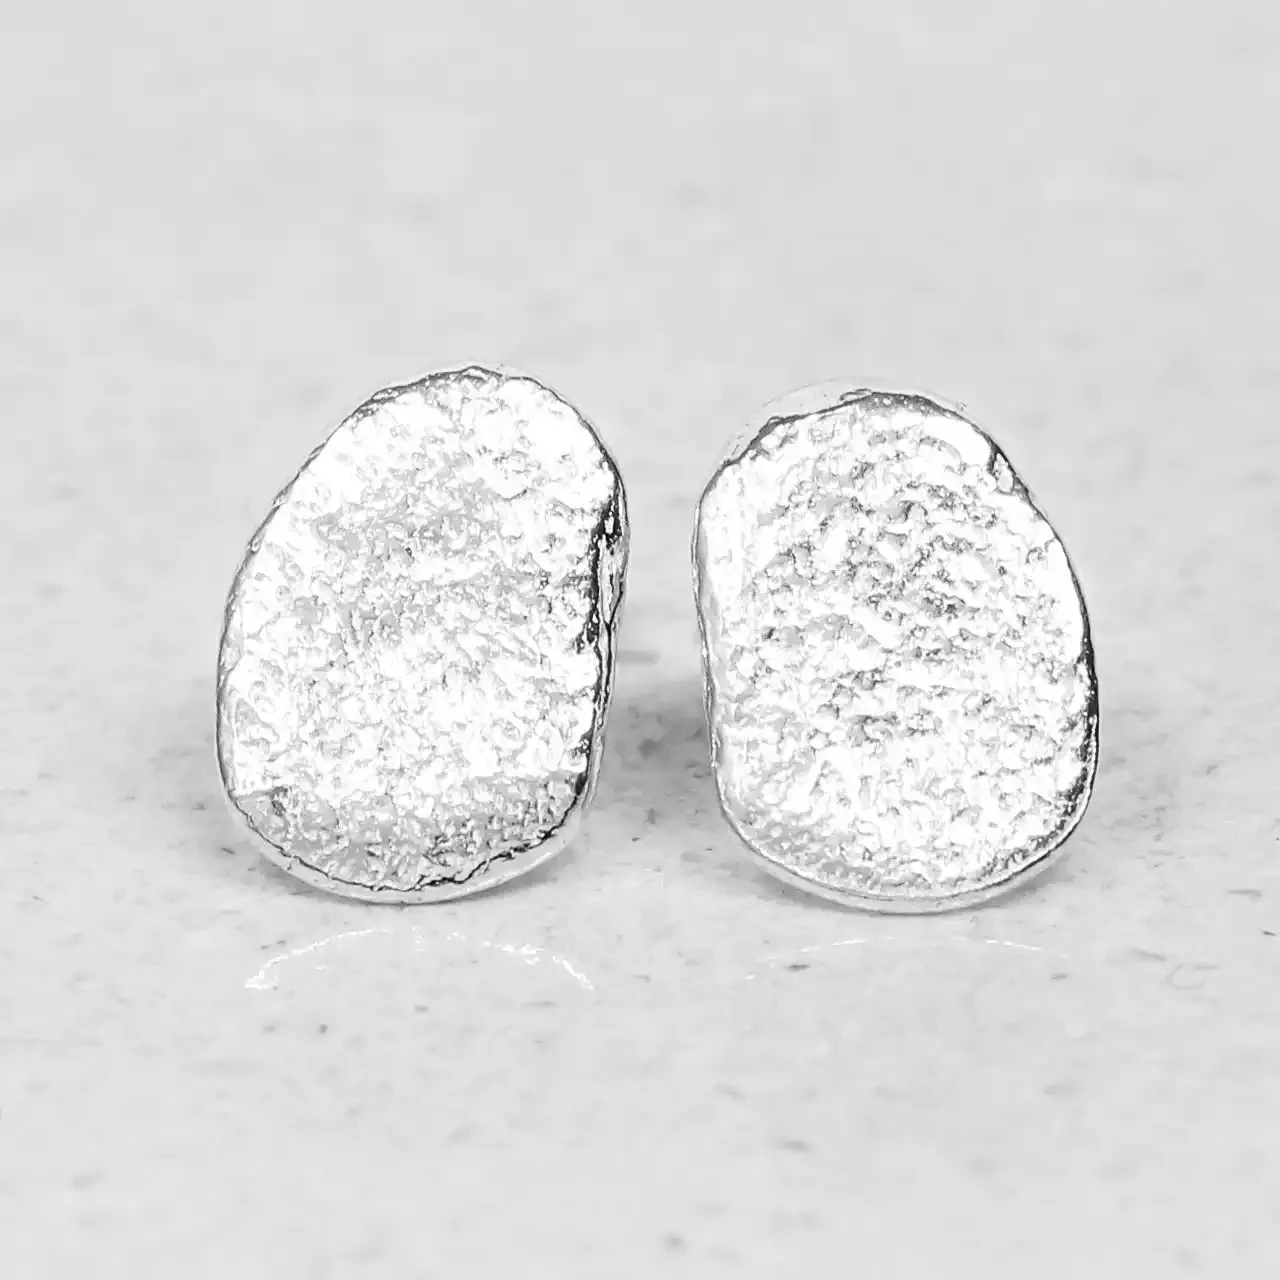 Pebble Silver Stud Earrings - Small by Silverfish